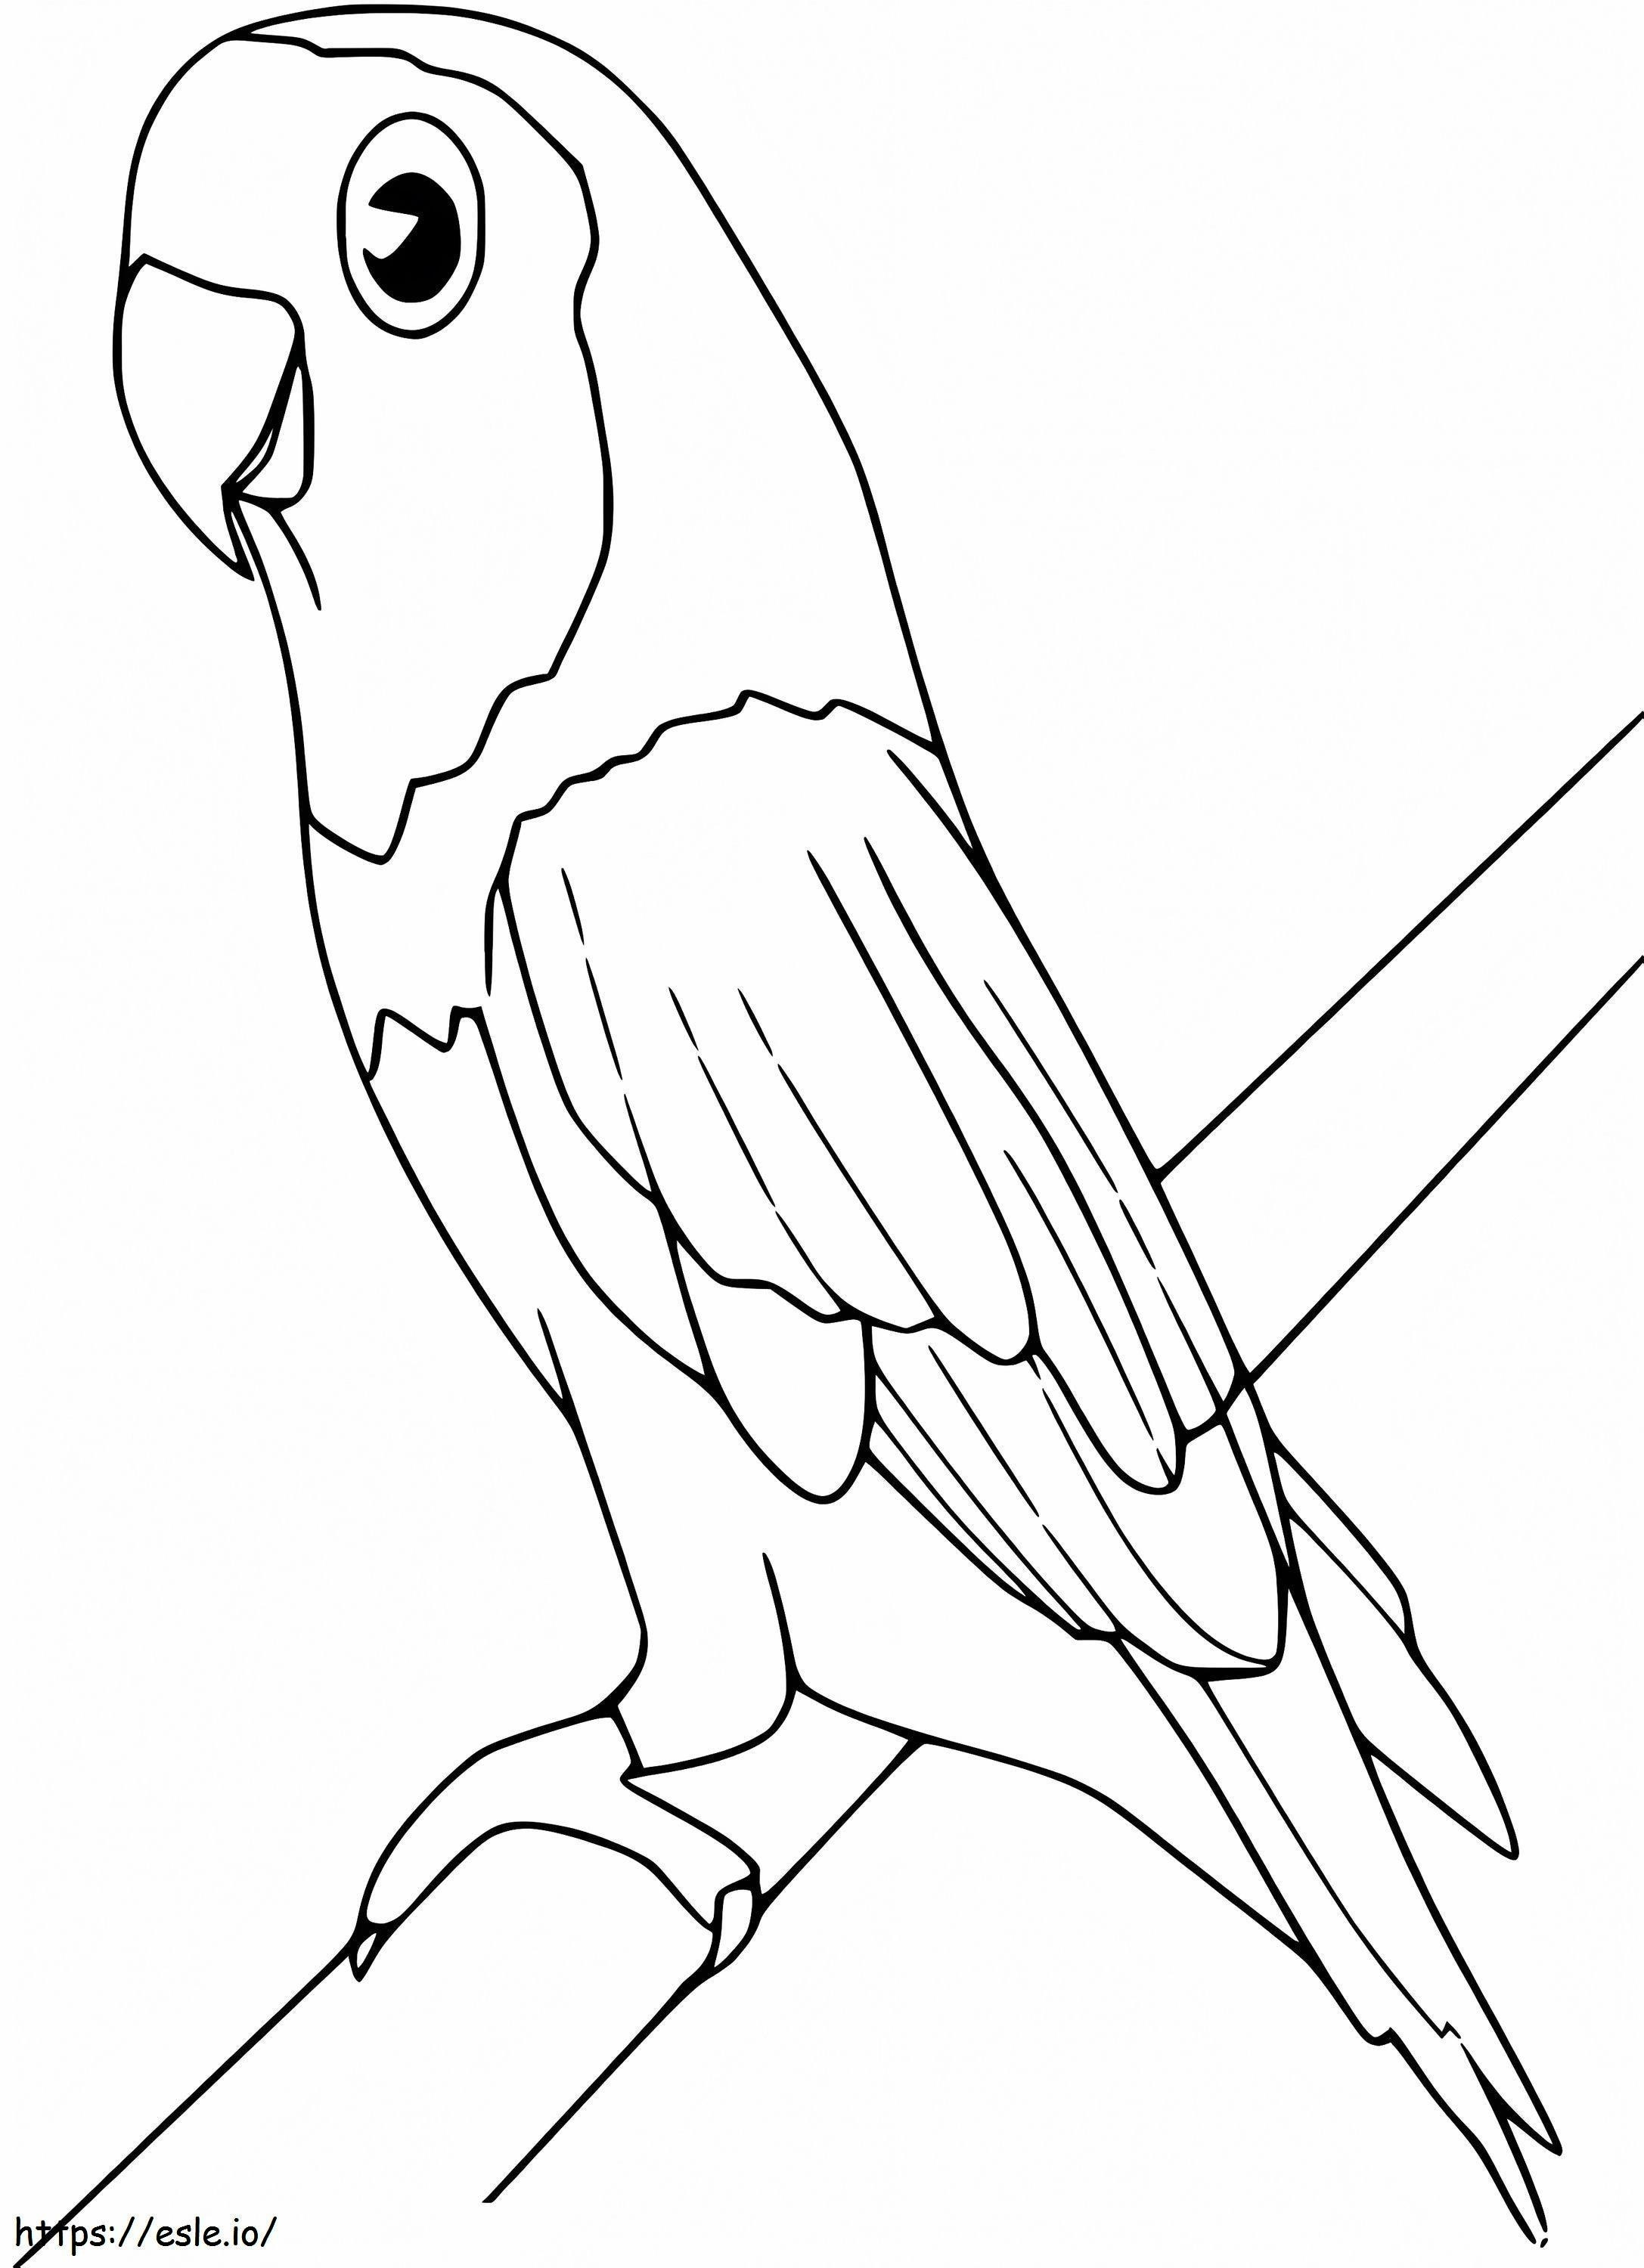 Urocza papuga kolorowanka